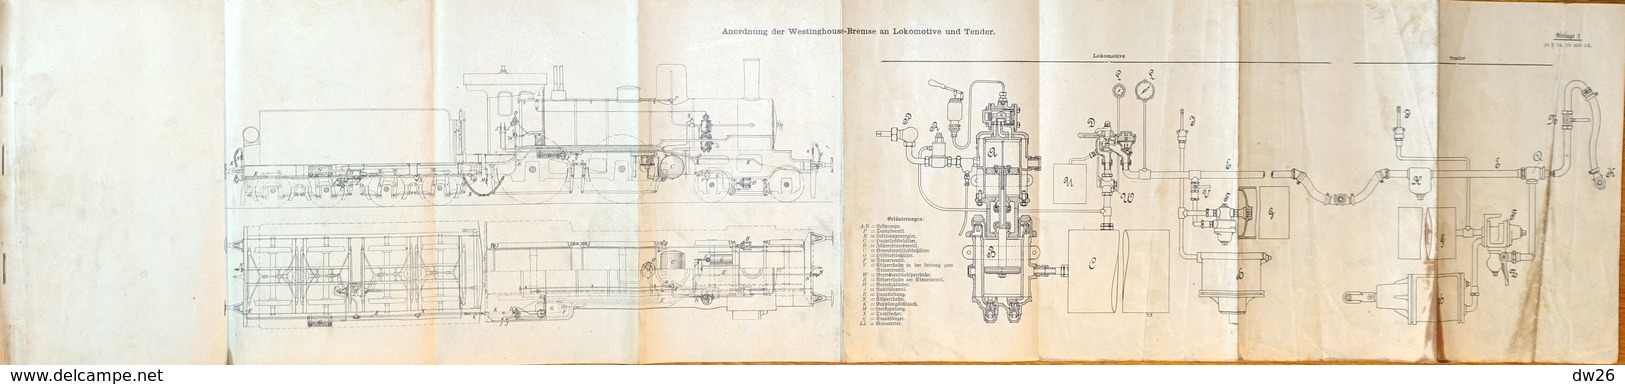 Planches Techniques Train (locomotives): Anordnung Der Westinghouse-Bremse And Lokomotive Und Tender - Technique